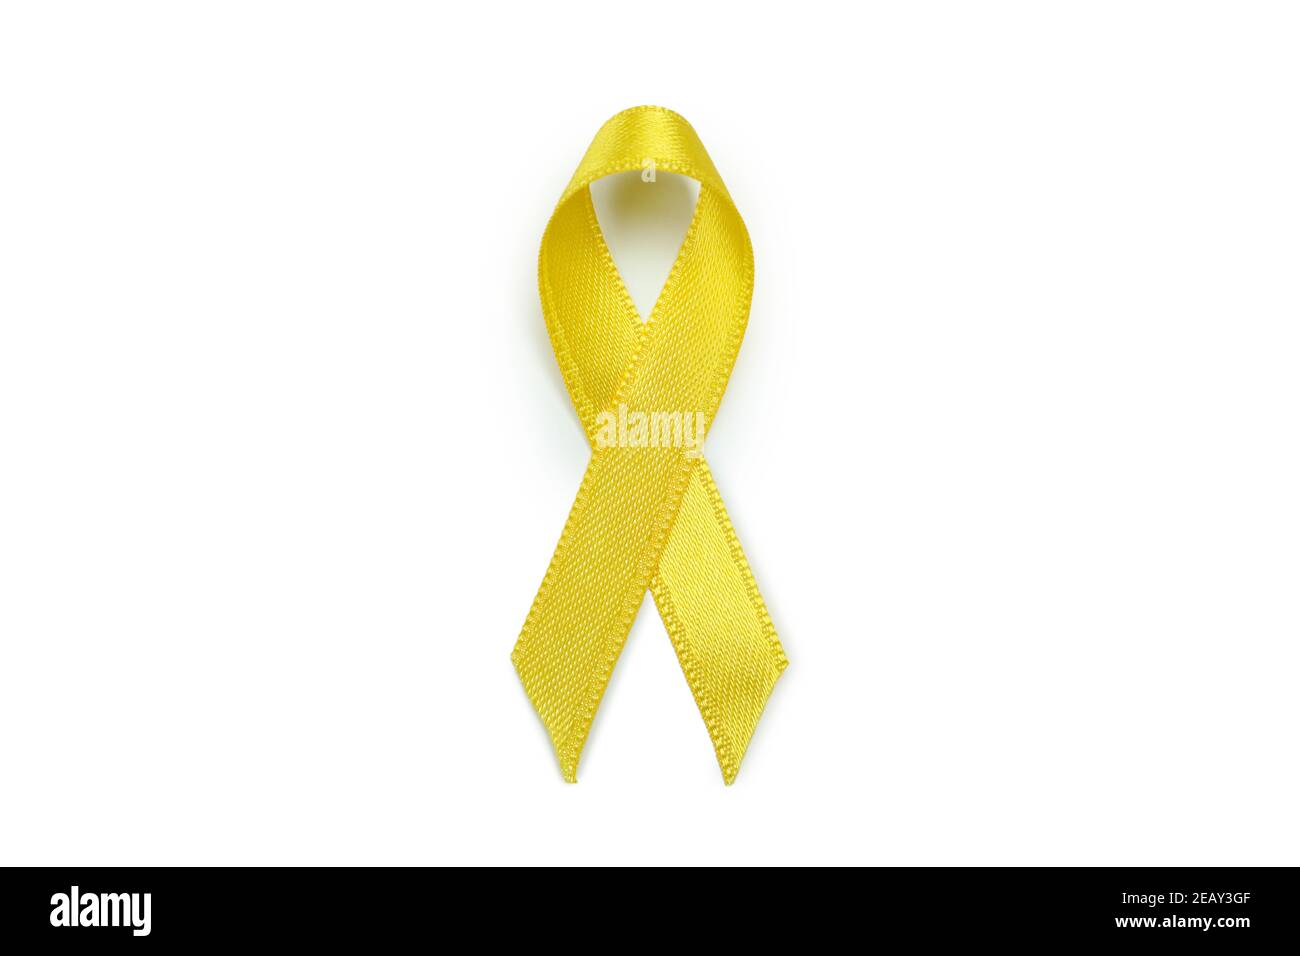 Child cancer awareness ribbon isolated on white background Stock Photo